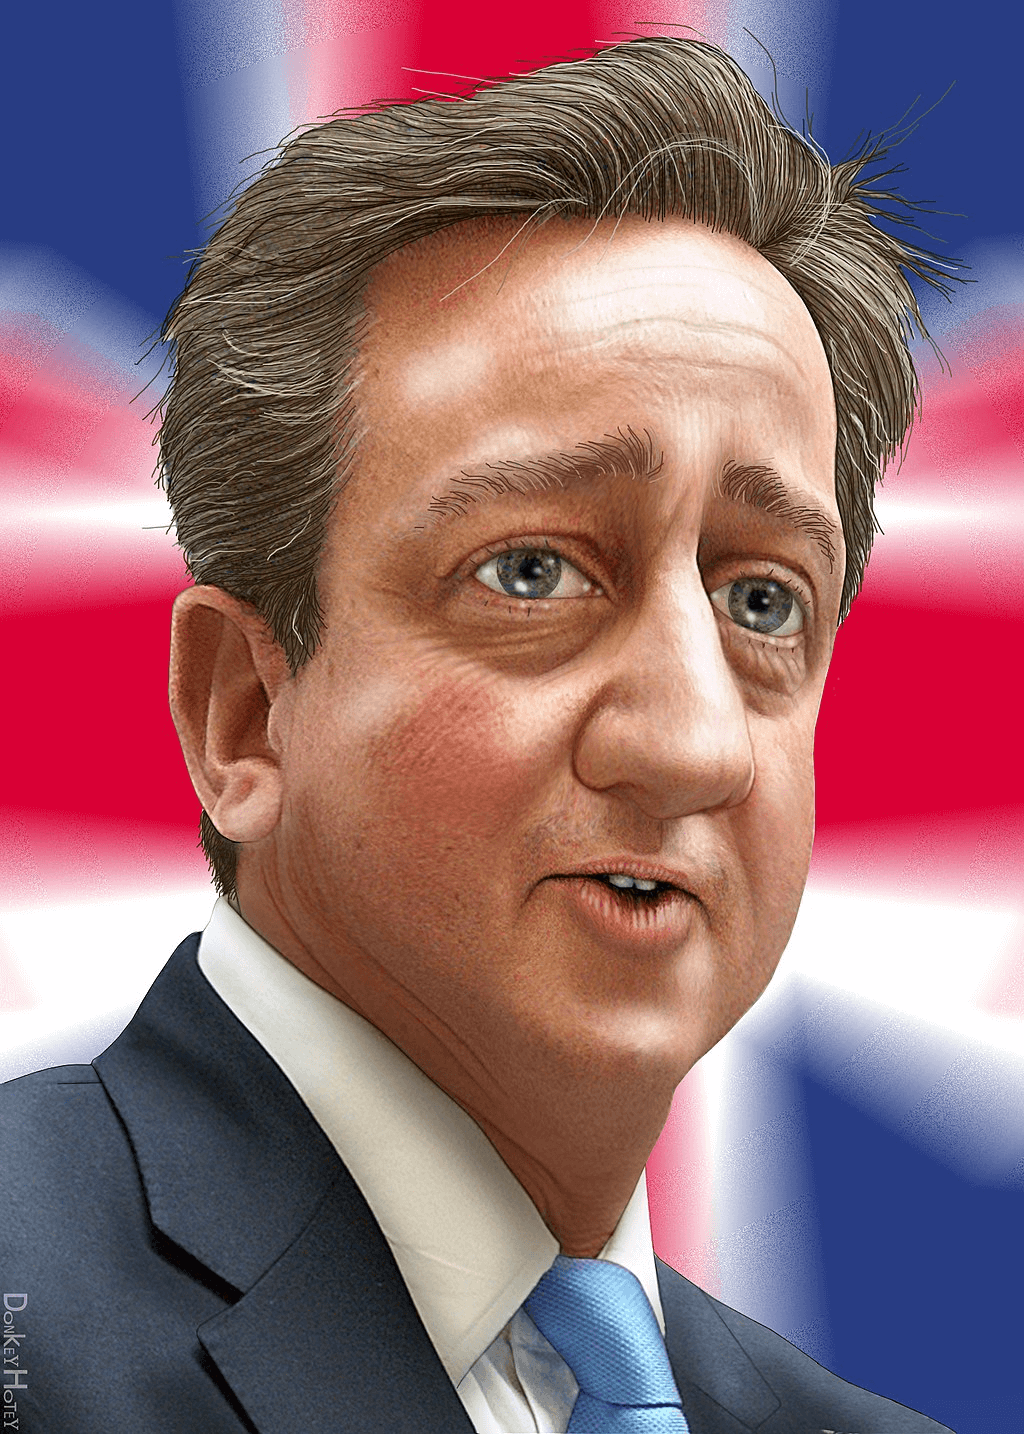 Caricature of former UK prime minister David Cameron: (c) DonkeyHotey, 2011, CC BY 2.0 via Wikimedia